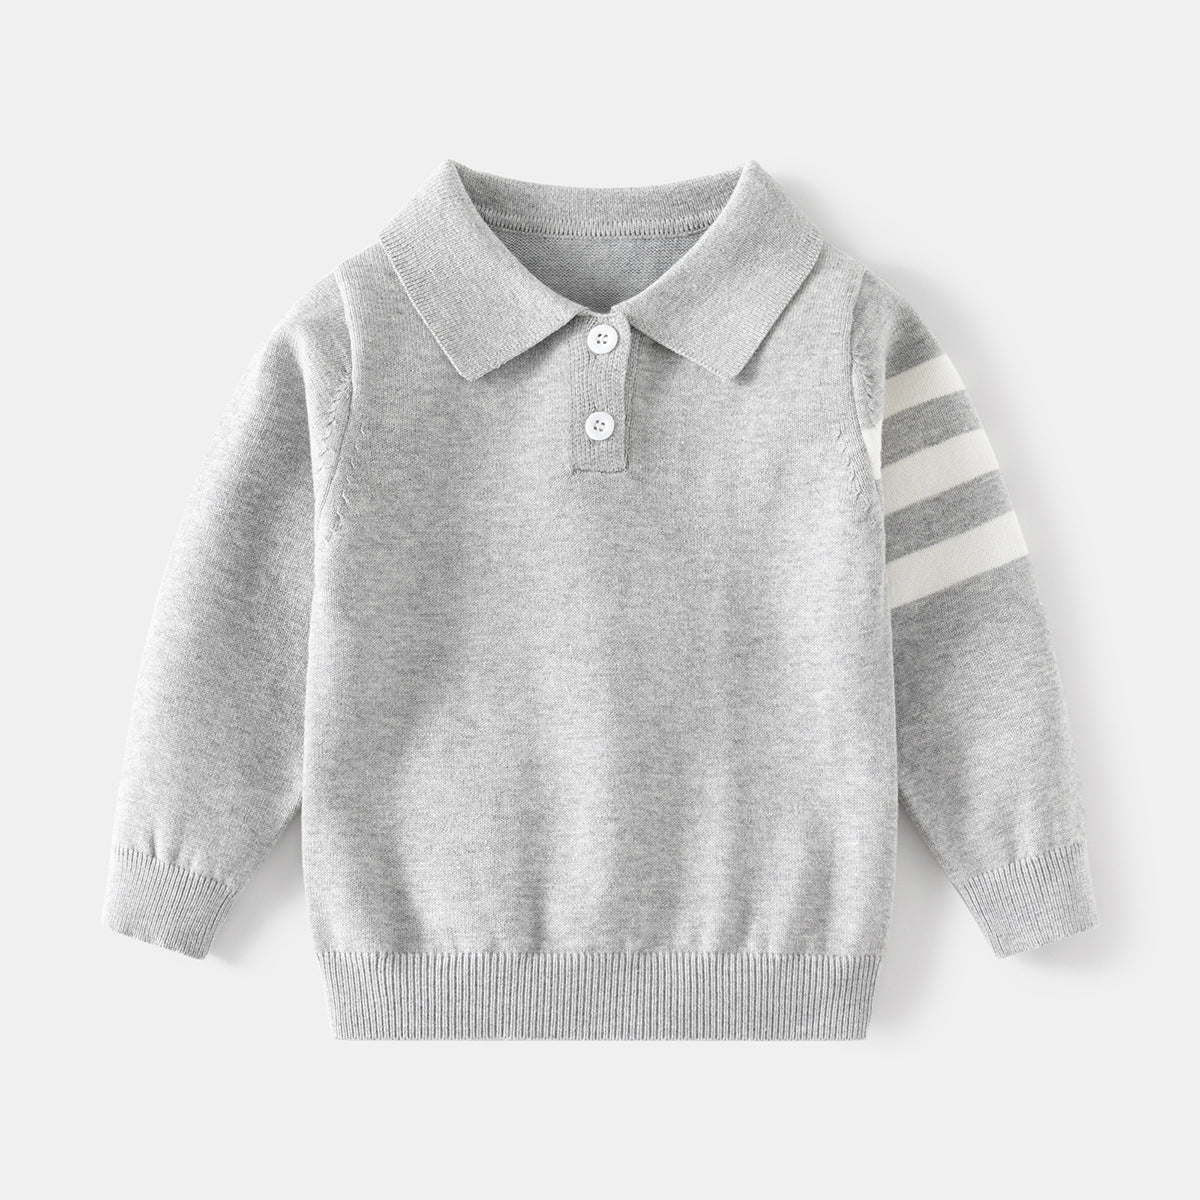 [5131059] - Baju Sweater Polo Lengan Panjang Fashion Import Anak Laki-Laki - Motif Plain Lines